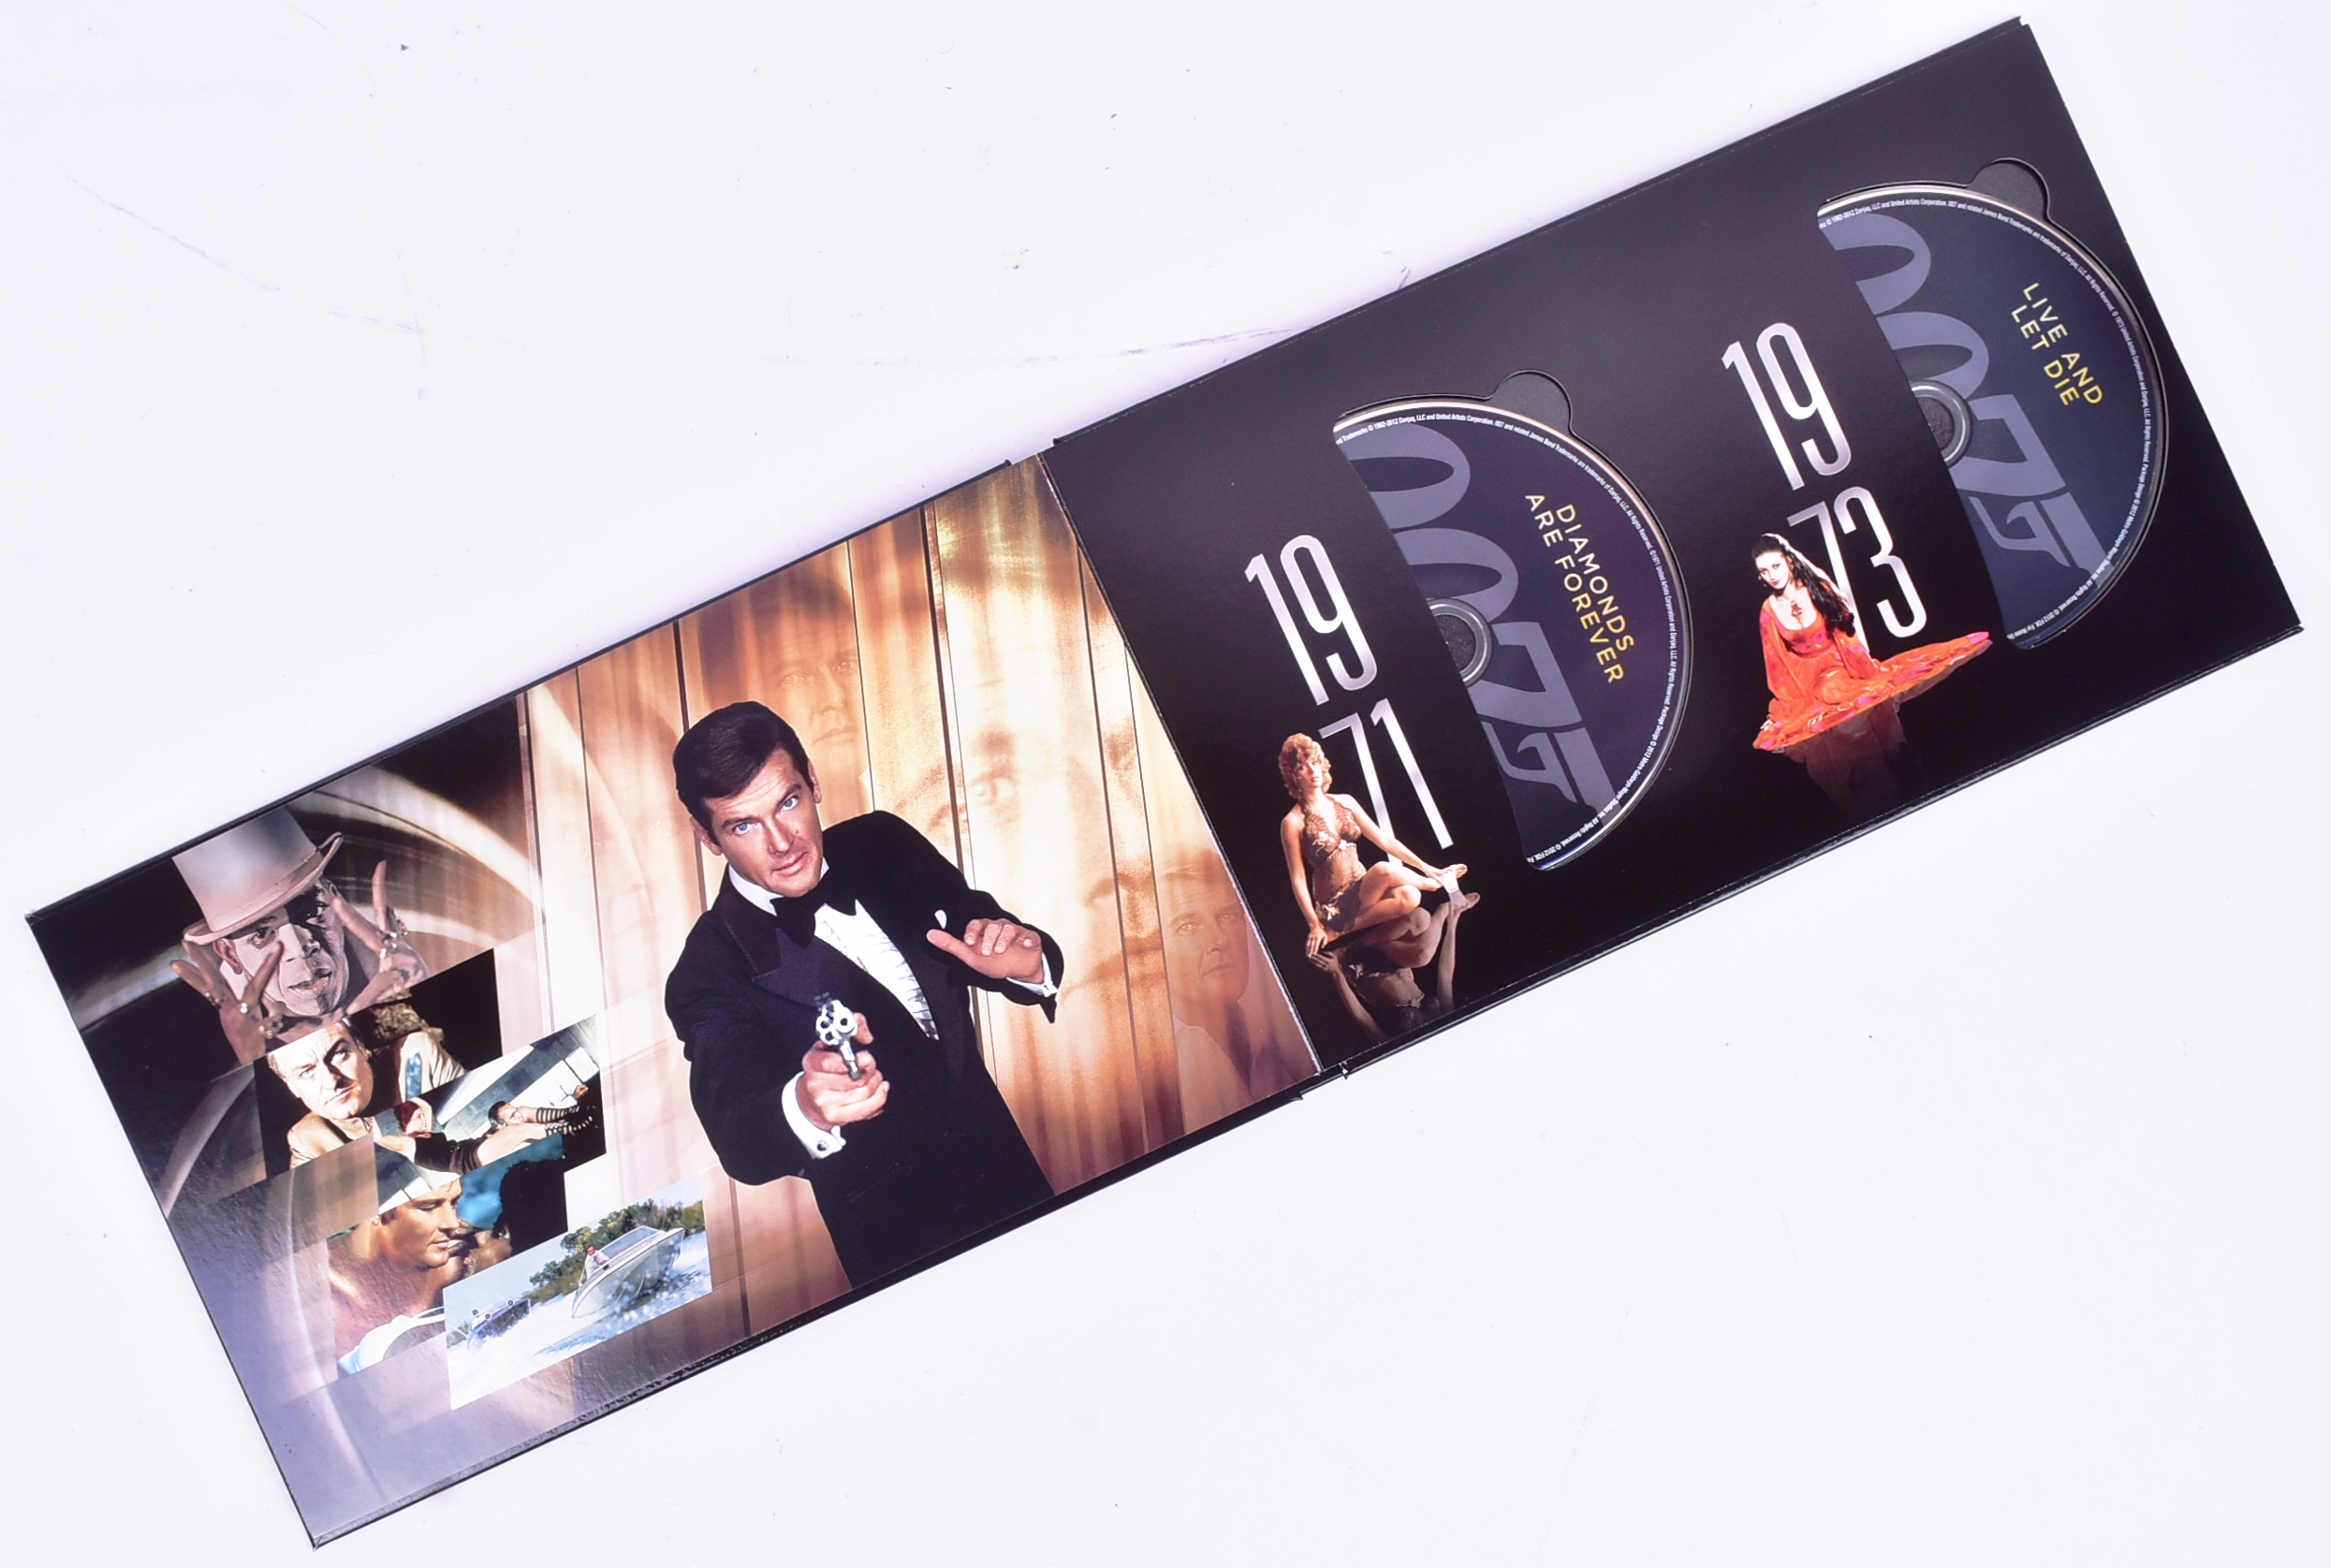 JAMES BOND 007 - ' FIVE DECADES ' BLU RAY DVD COLLECTION BOX SET - Image 5 of 5